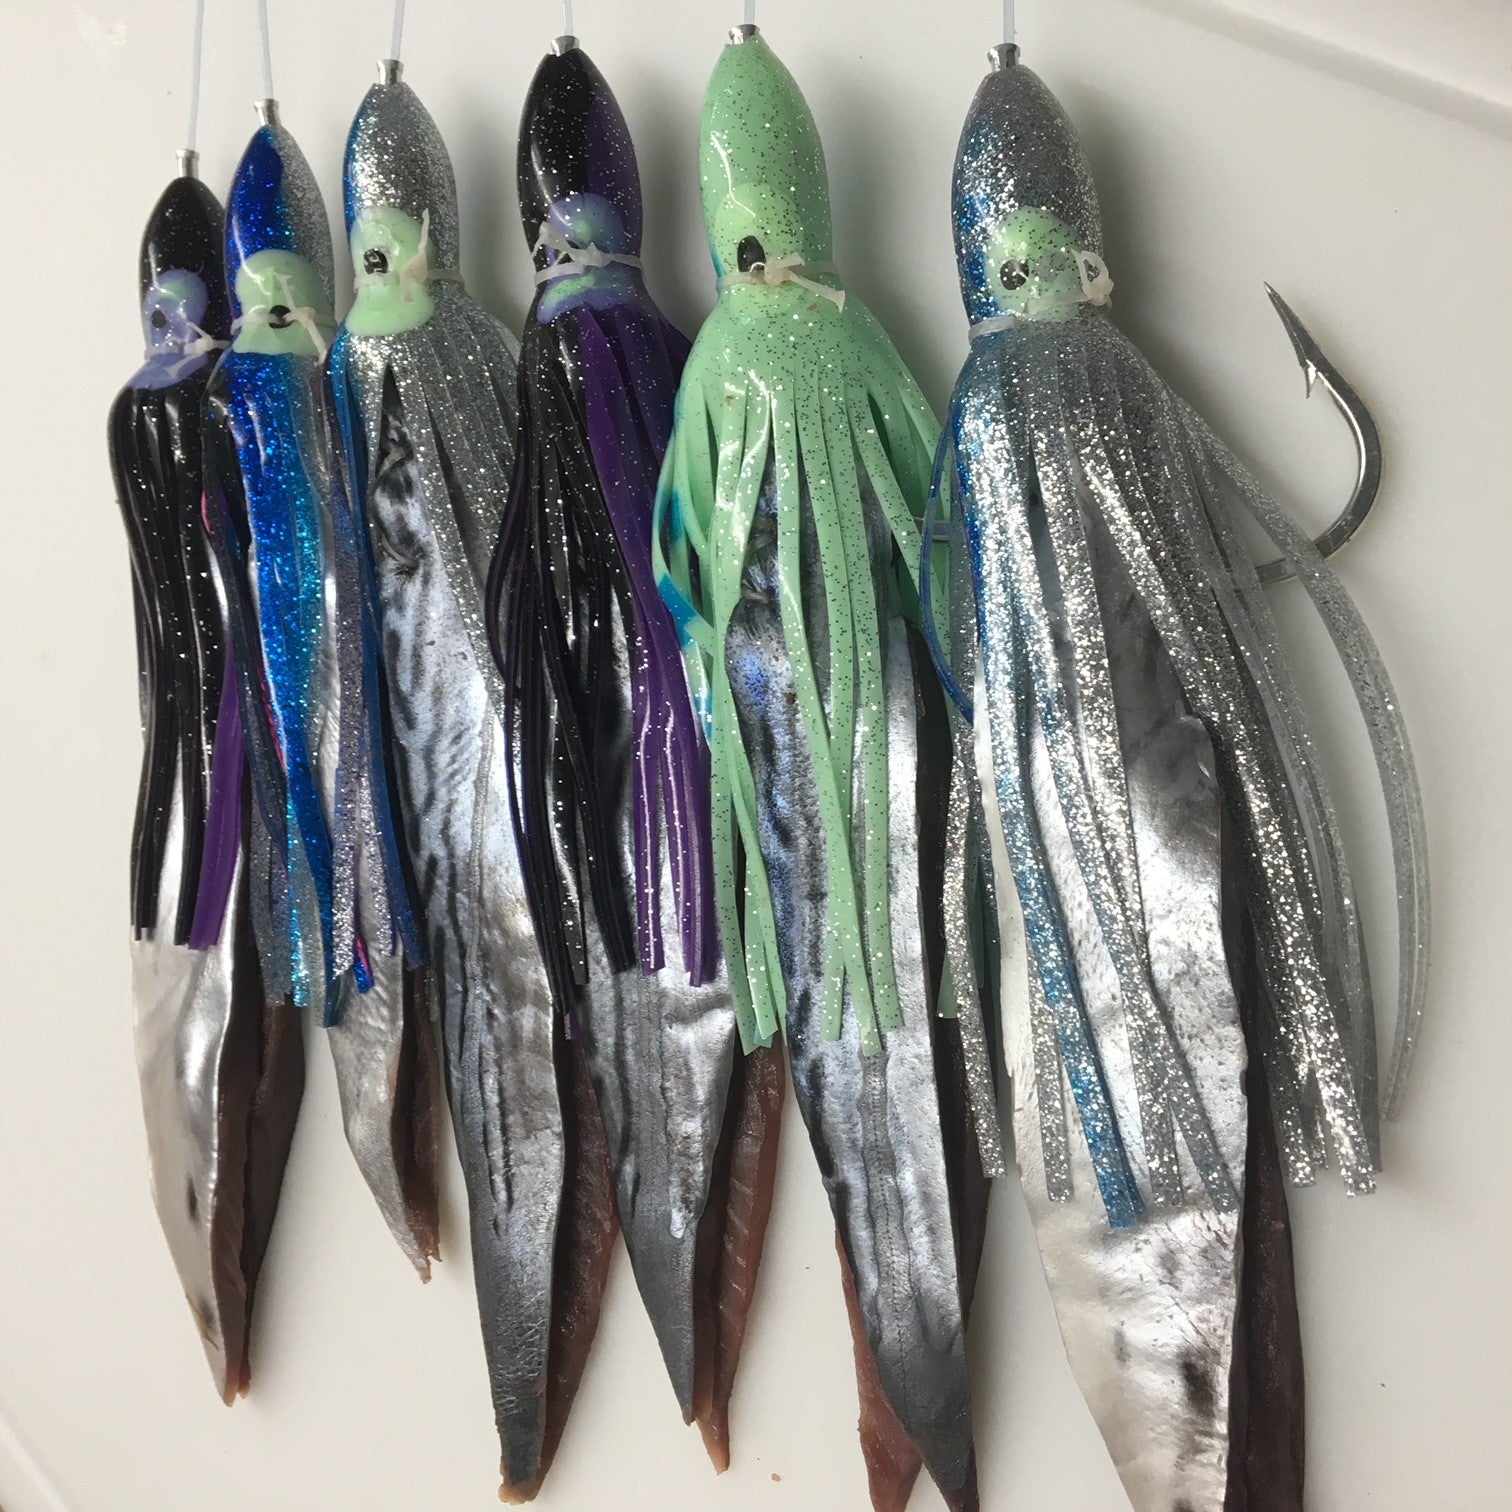 Swordfish – Tackle, tactics and baits for SoCal swordfishing (5